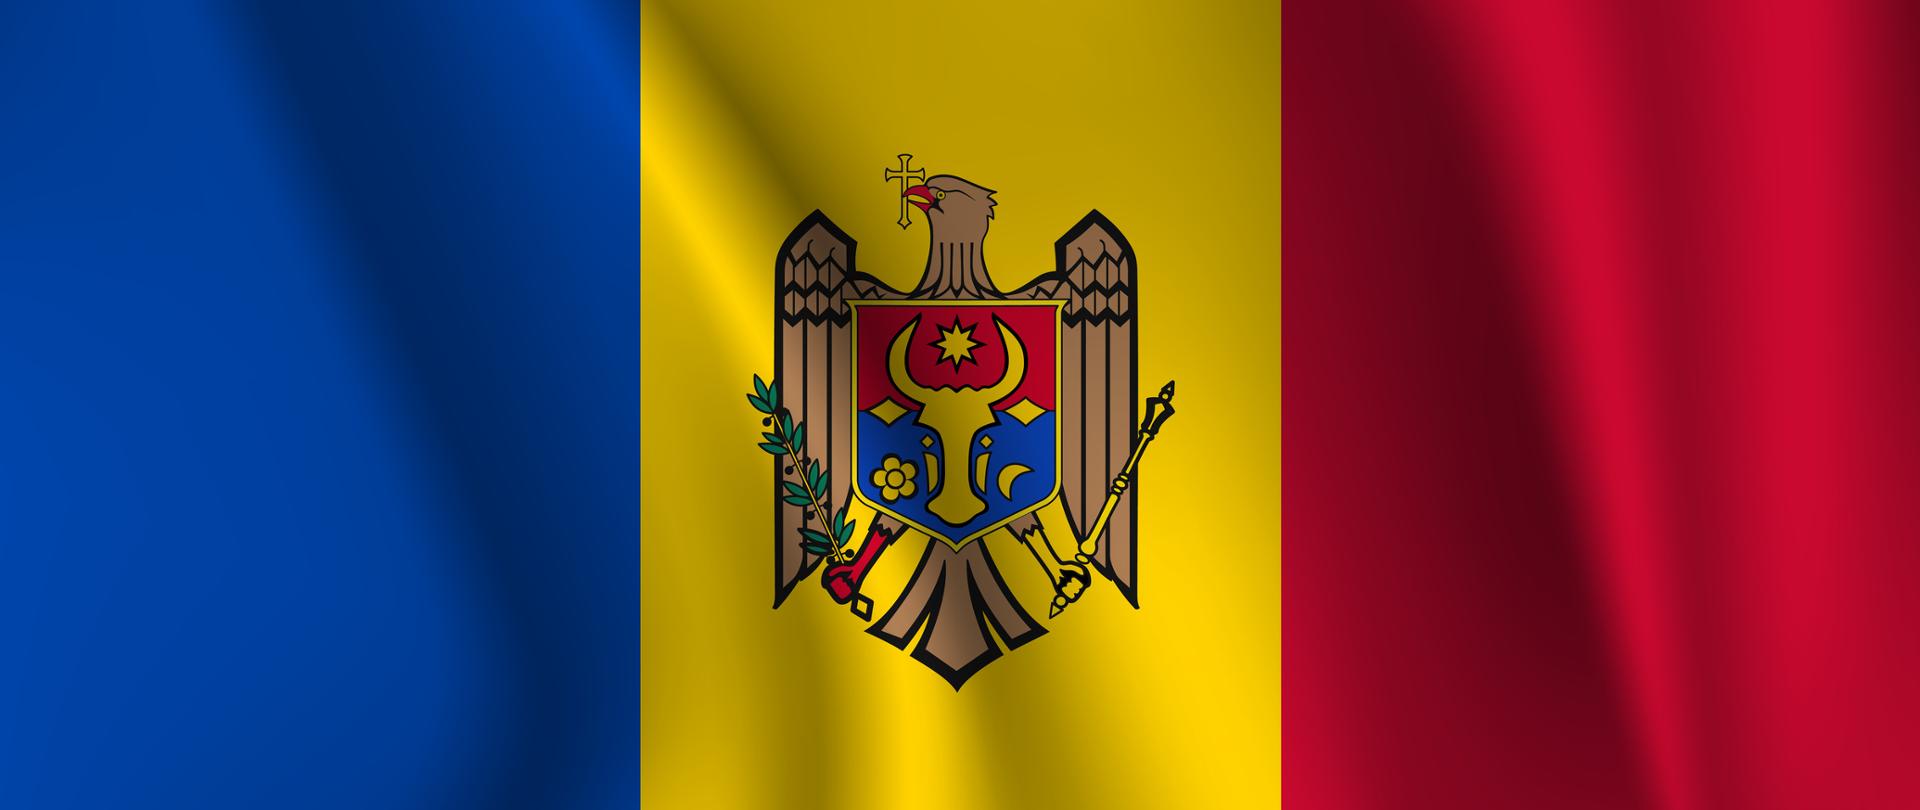 3D Waving Flag of Moldova